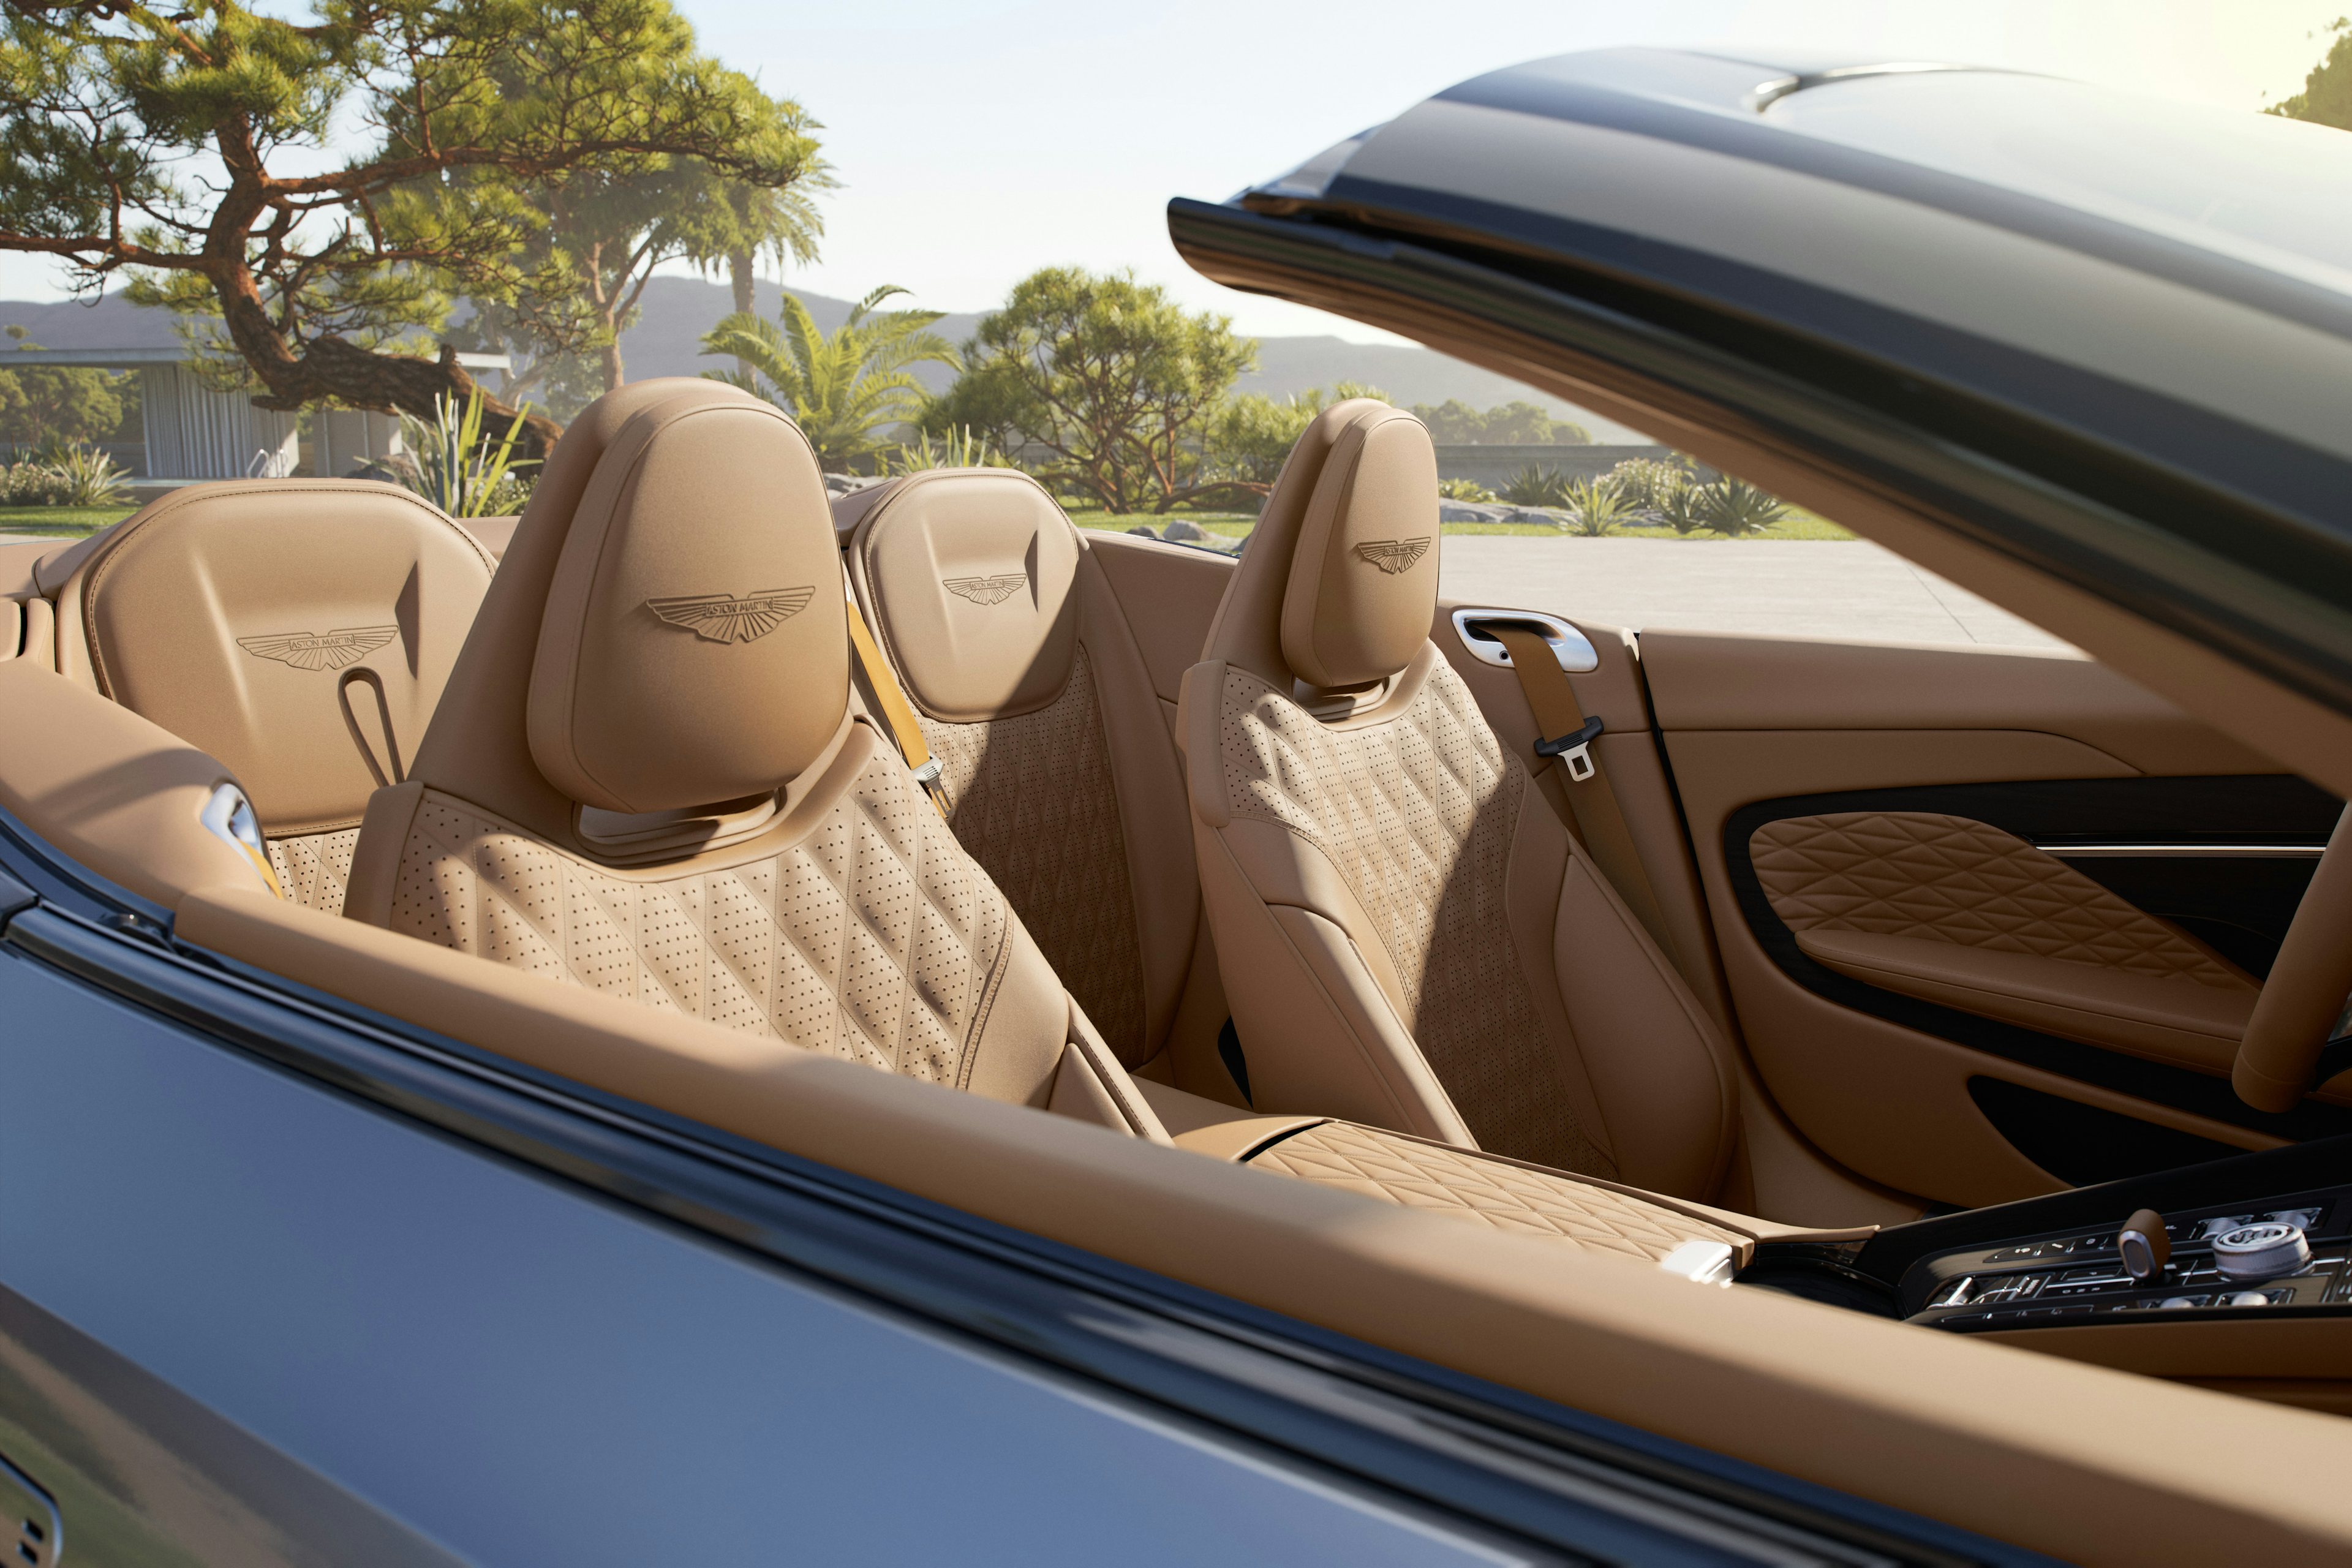 aston martin interior leather stitching seat detail unreal engine environment full cgi